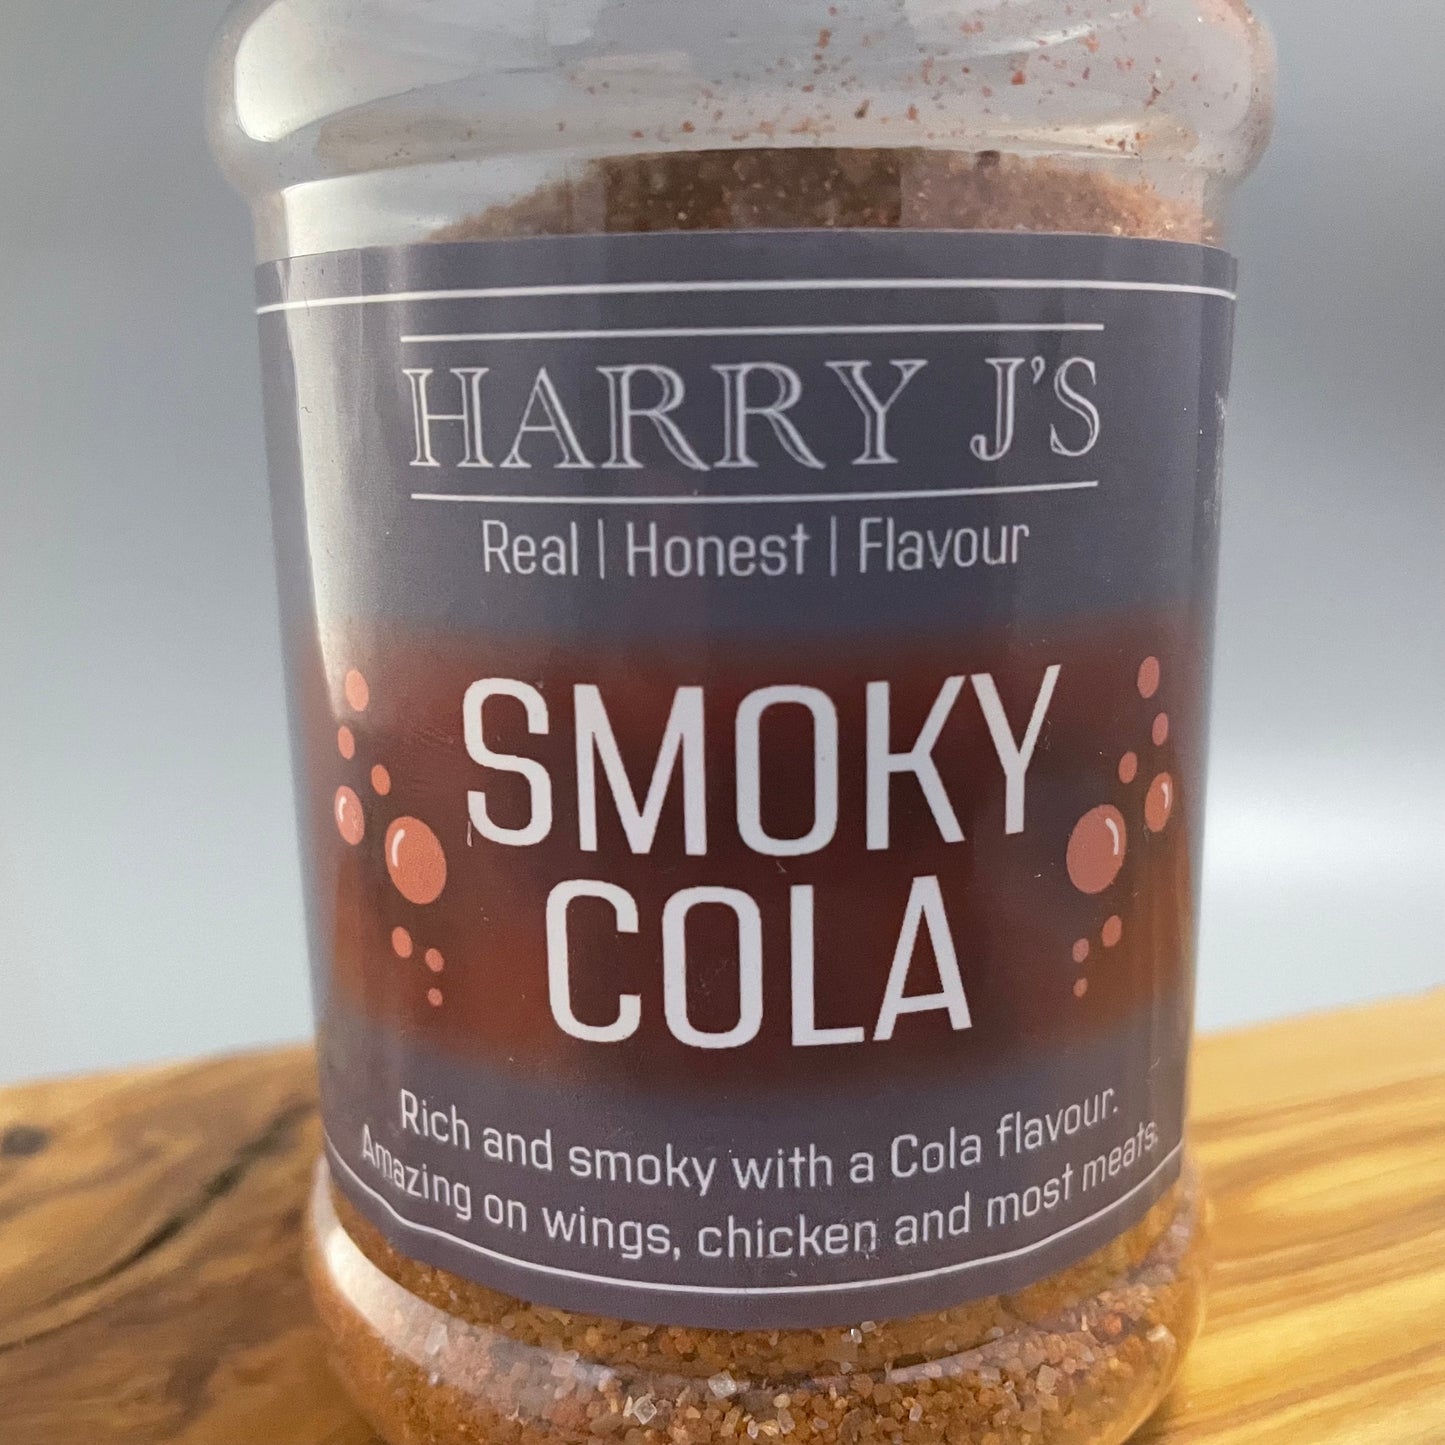 Harry J's Smoky Cola Rub and Seasoning